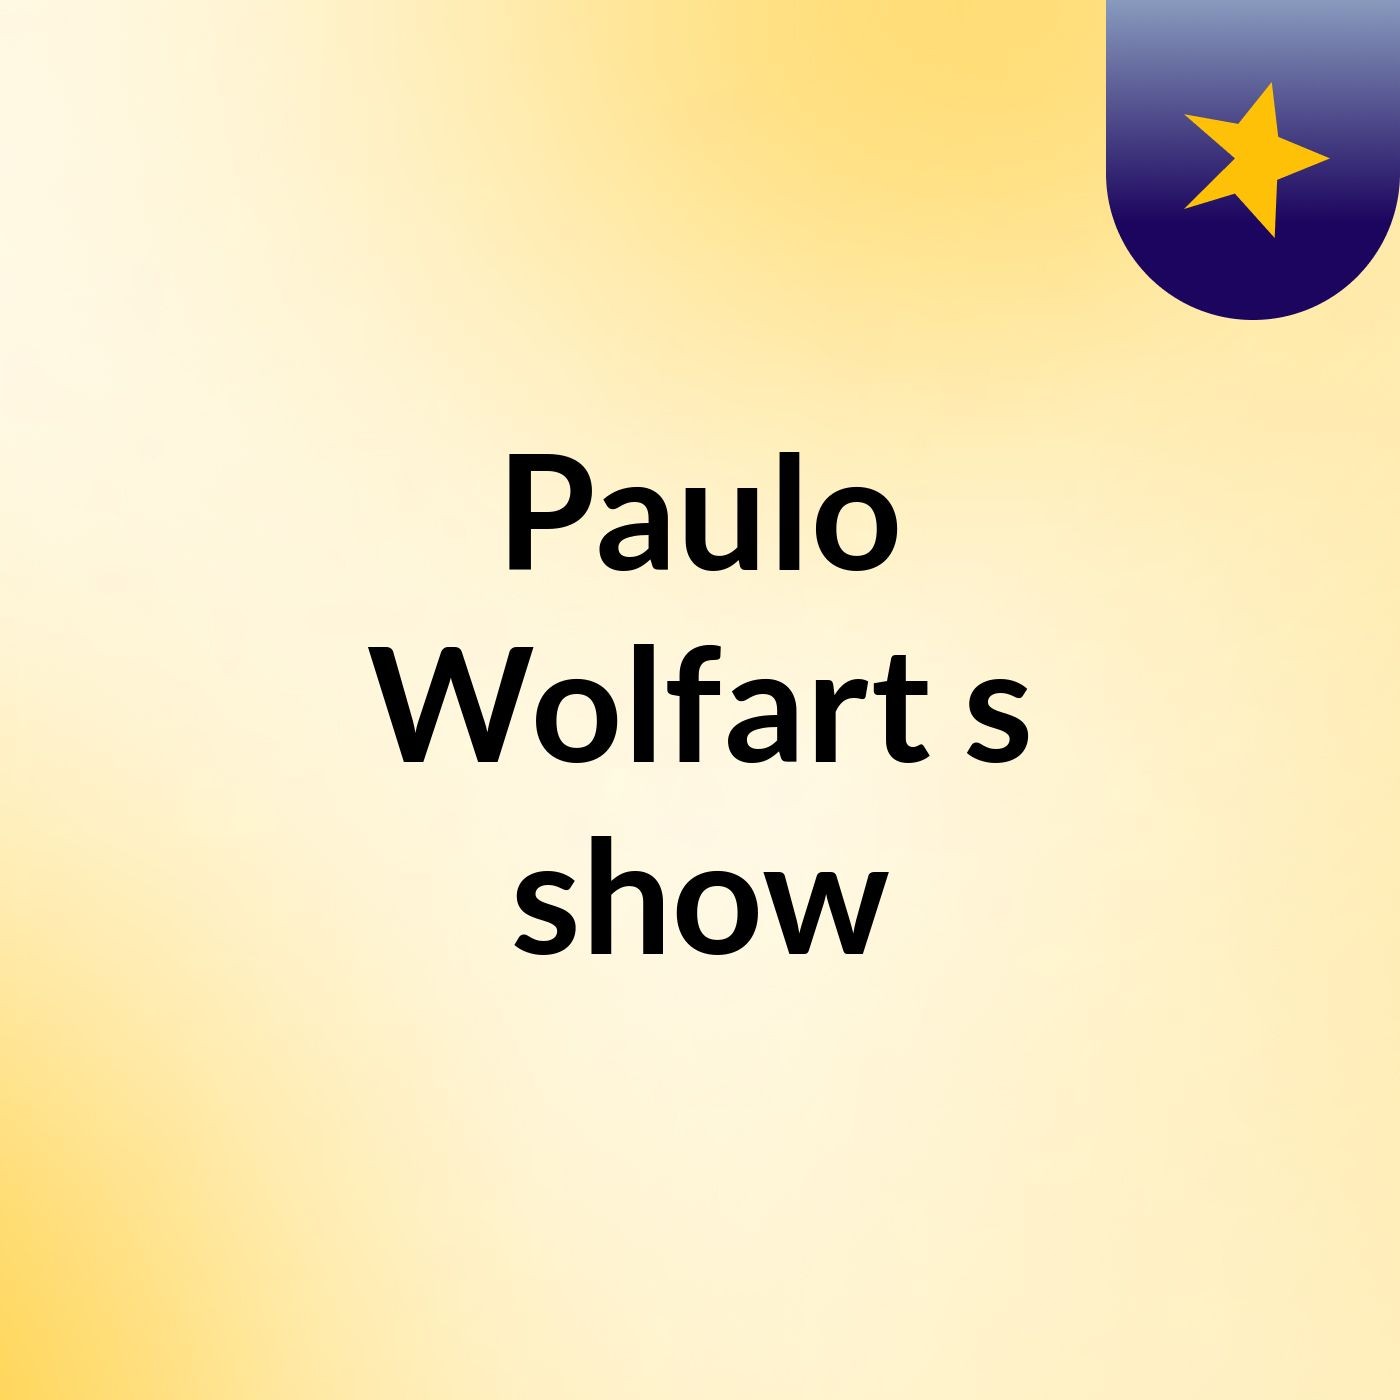 Paulo Wolfart's show